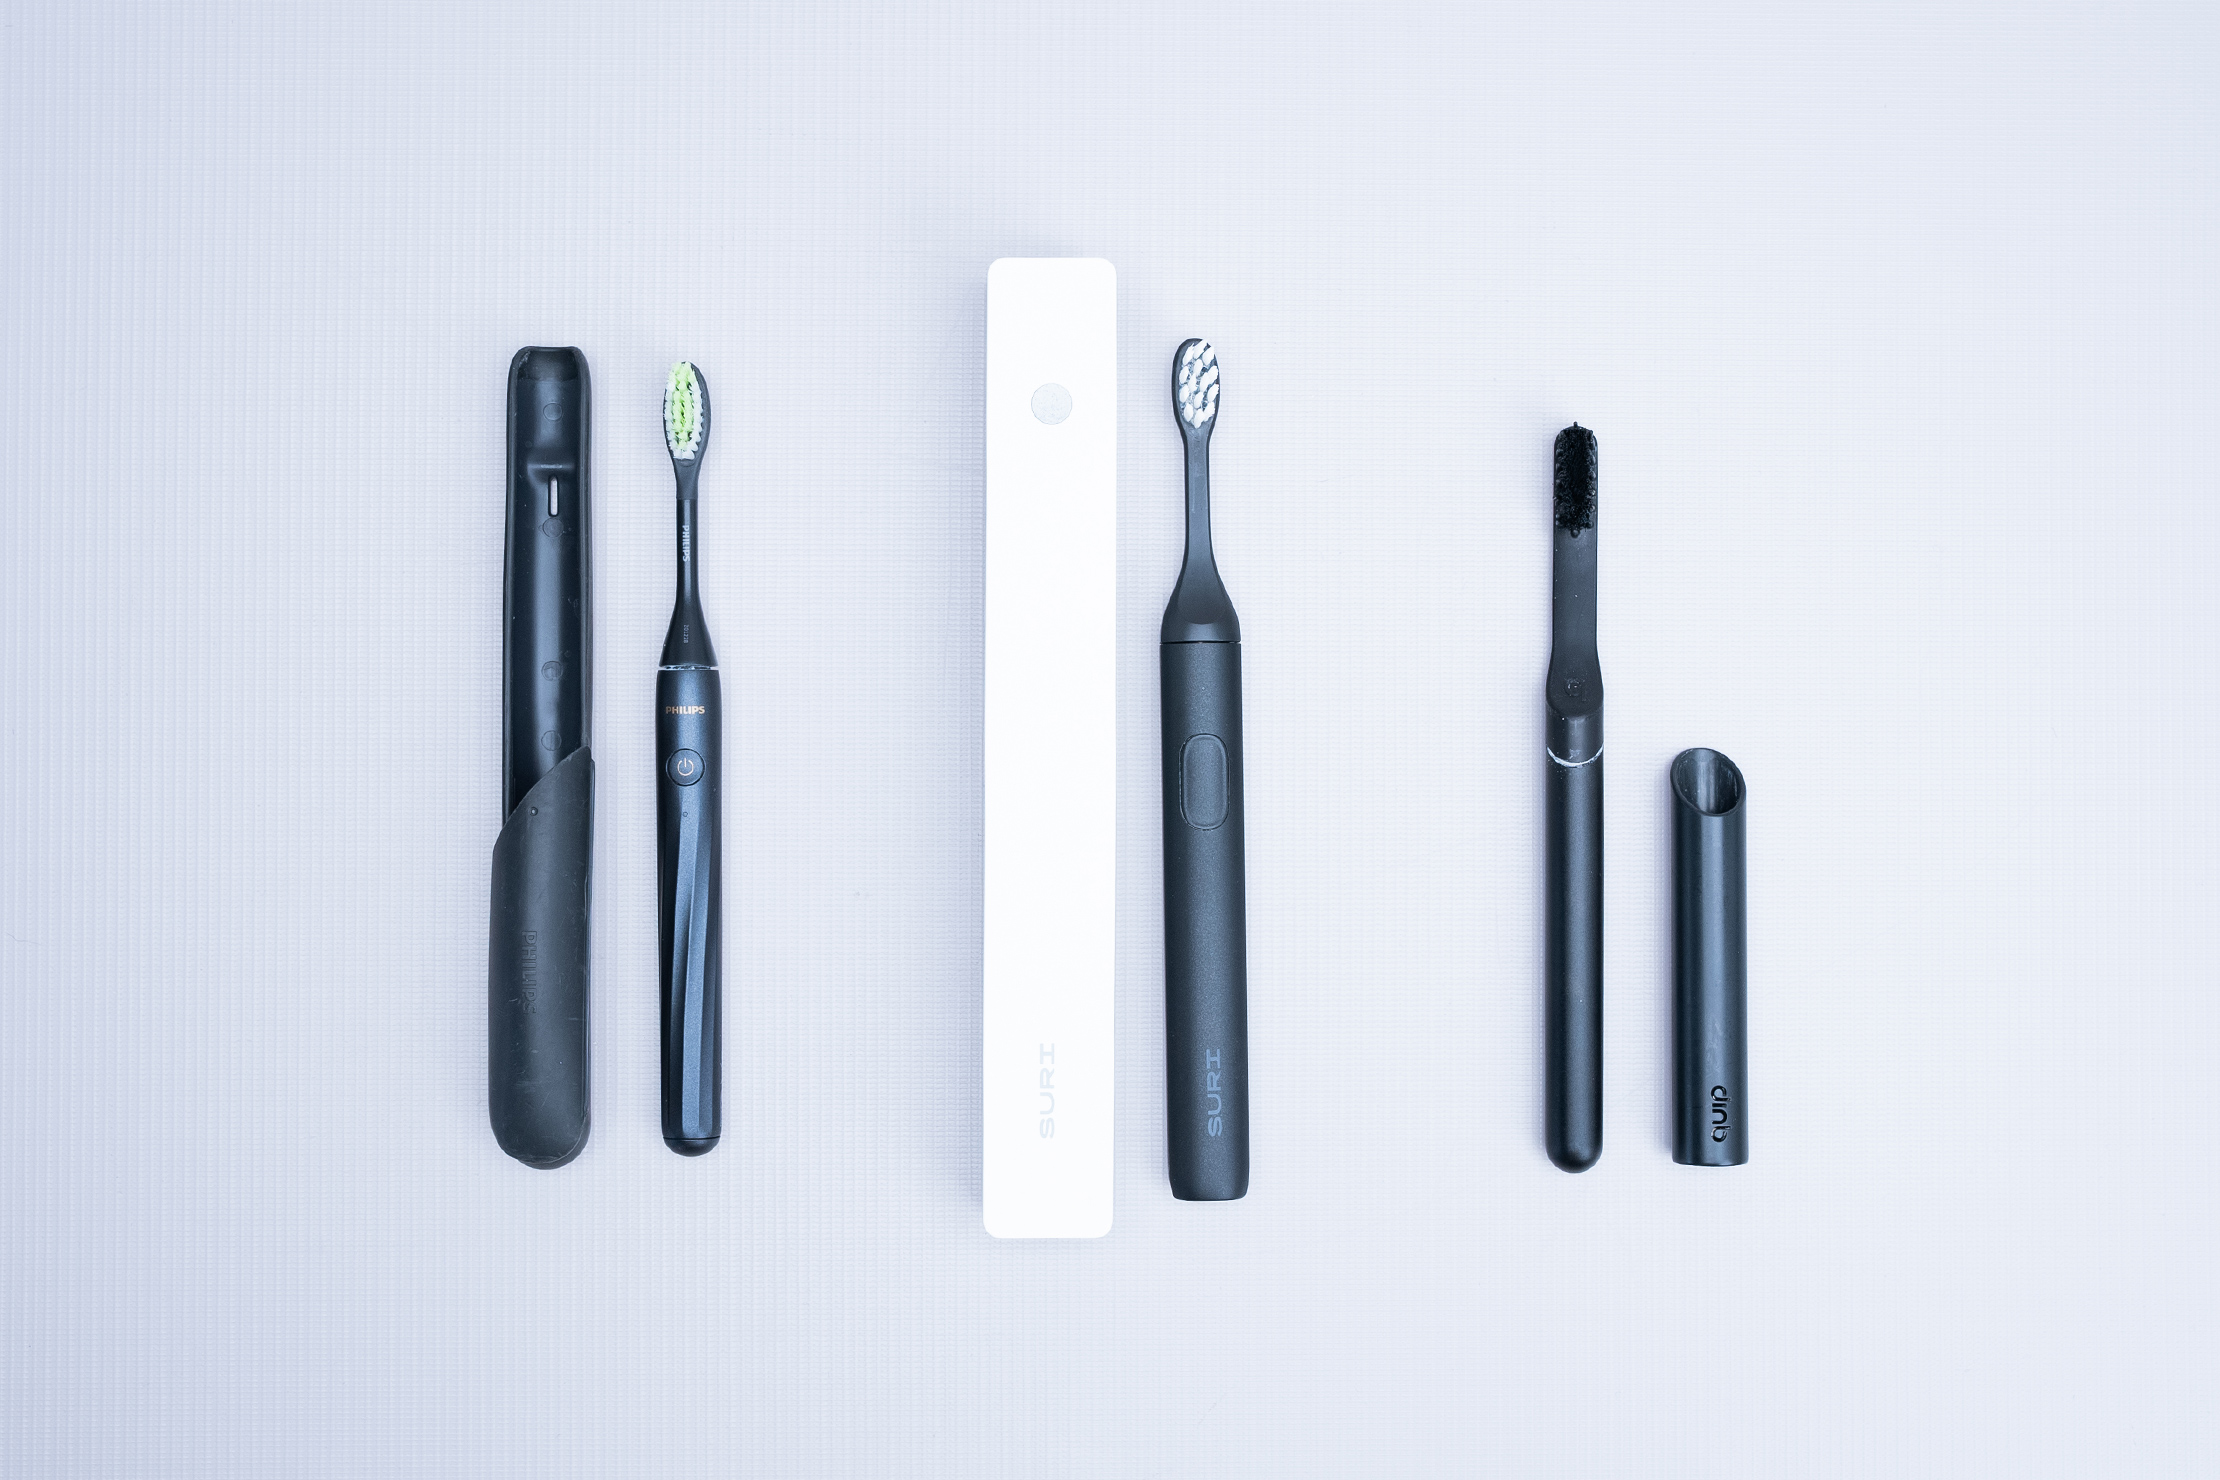 SURI Sustainable Sonic Toothbrush Comparison